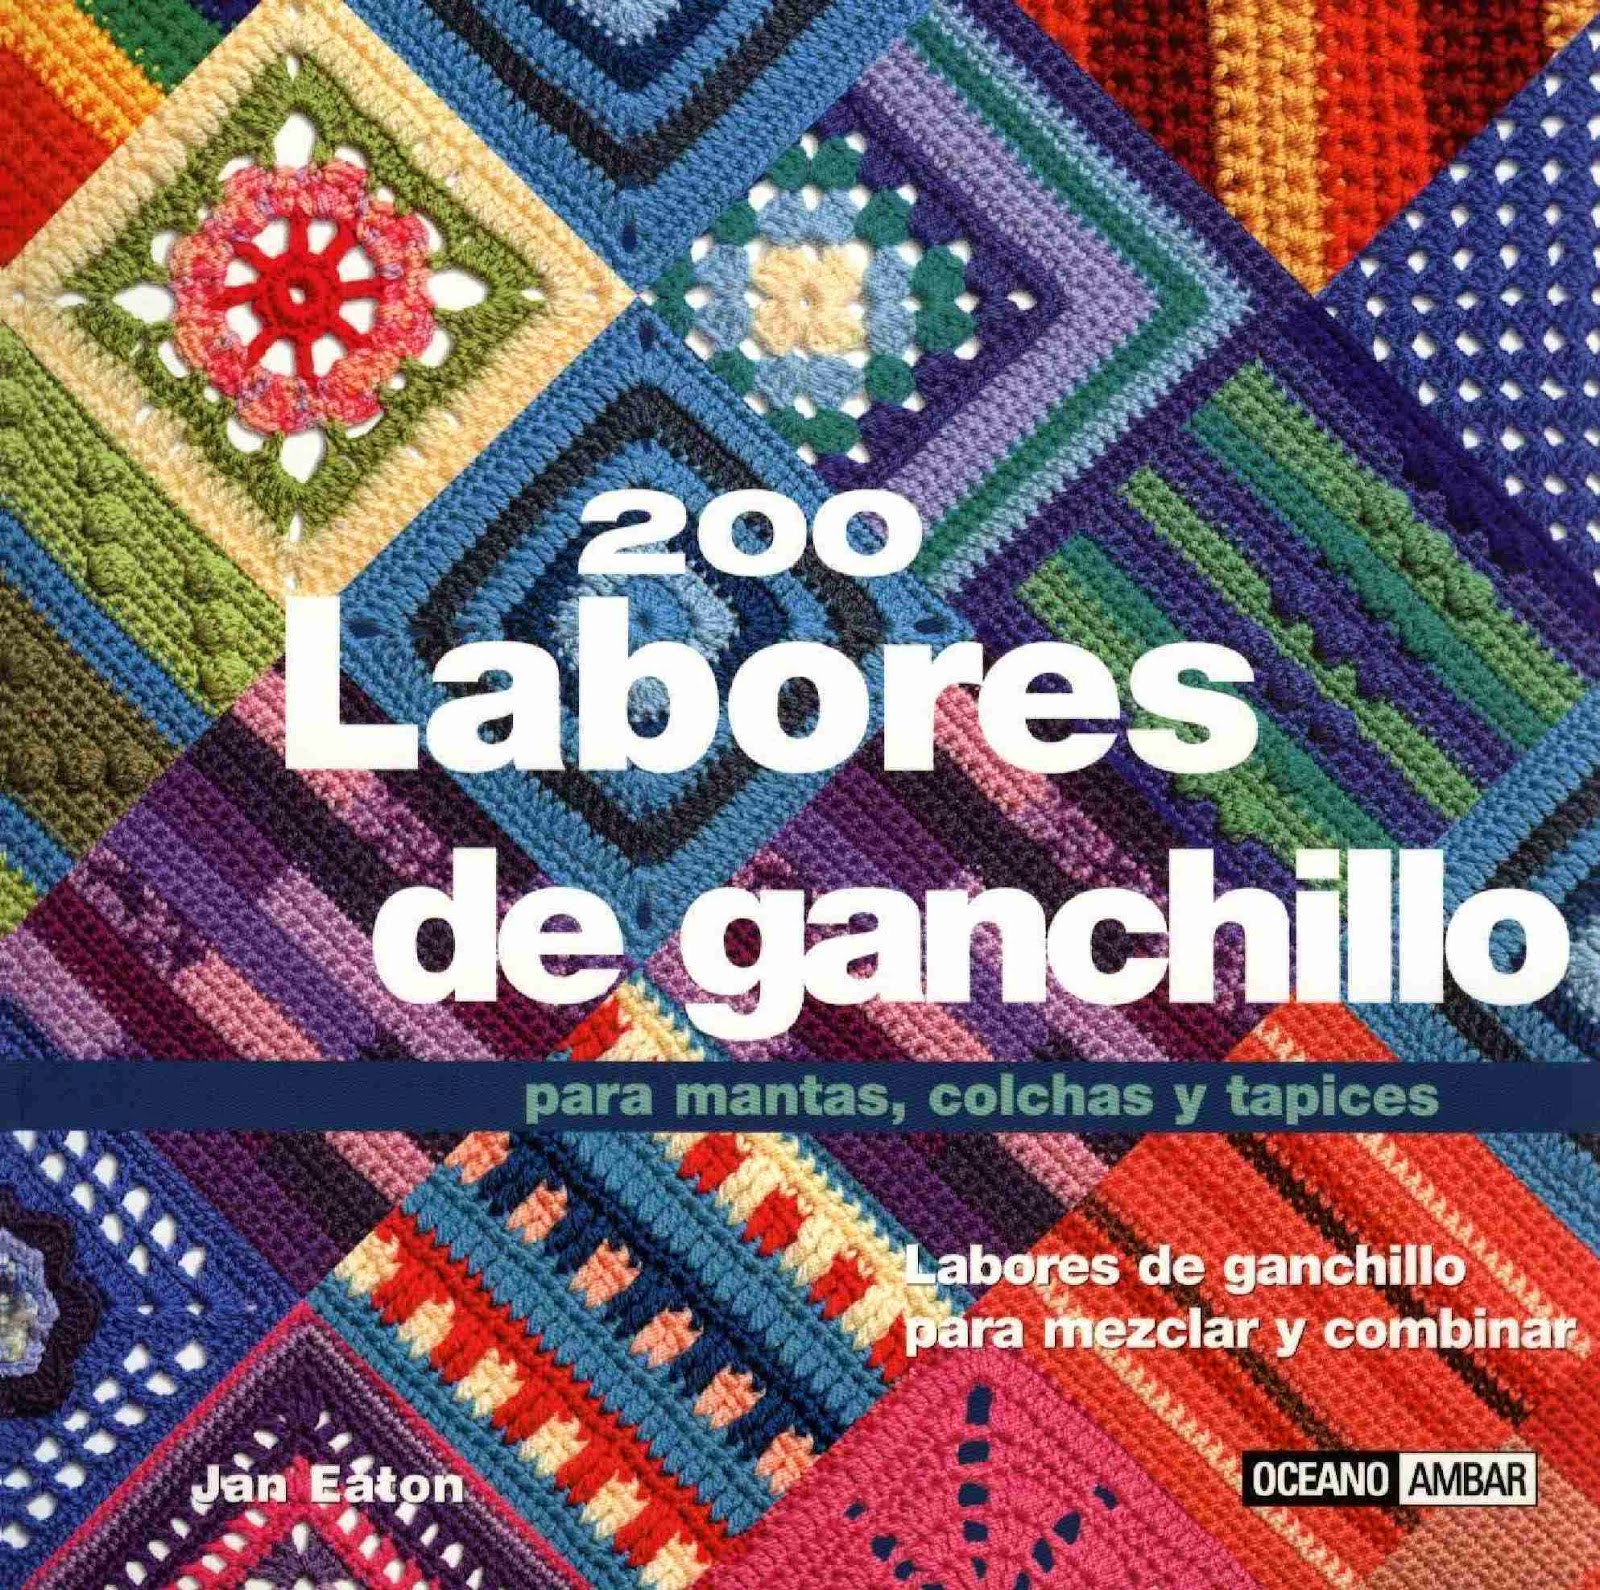 Descargar Libro 200 Labores de Ganchillo GRATIS!